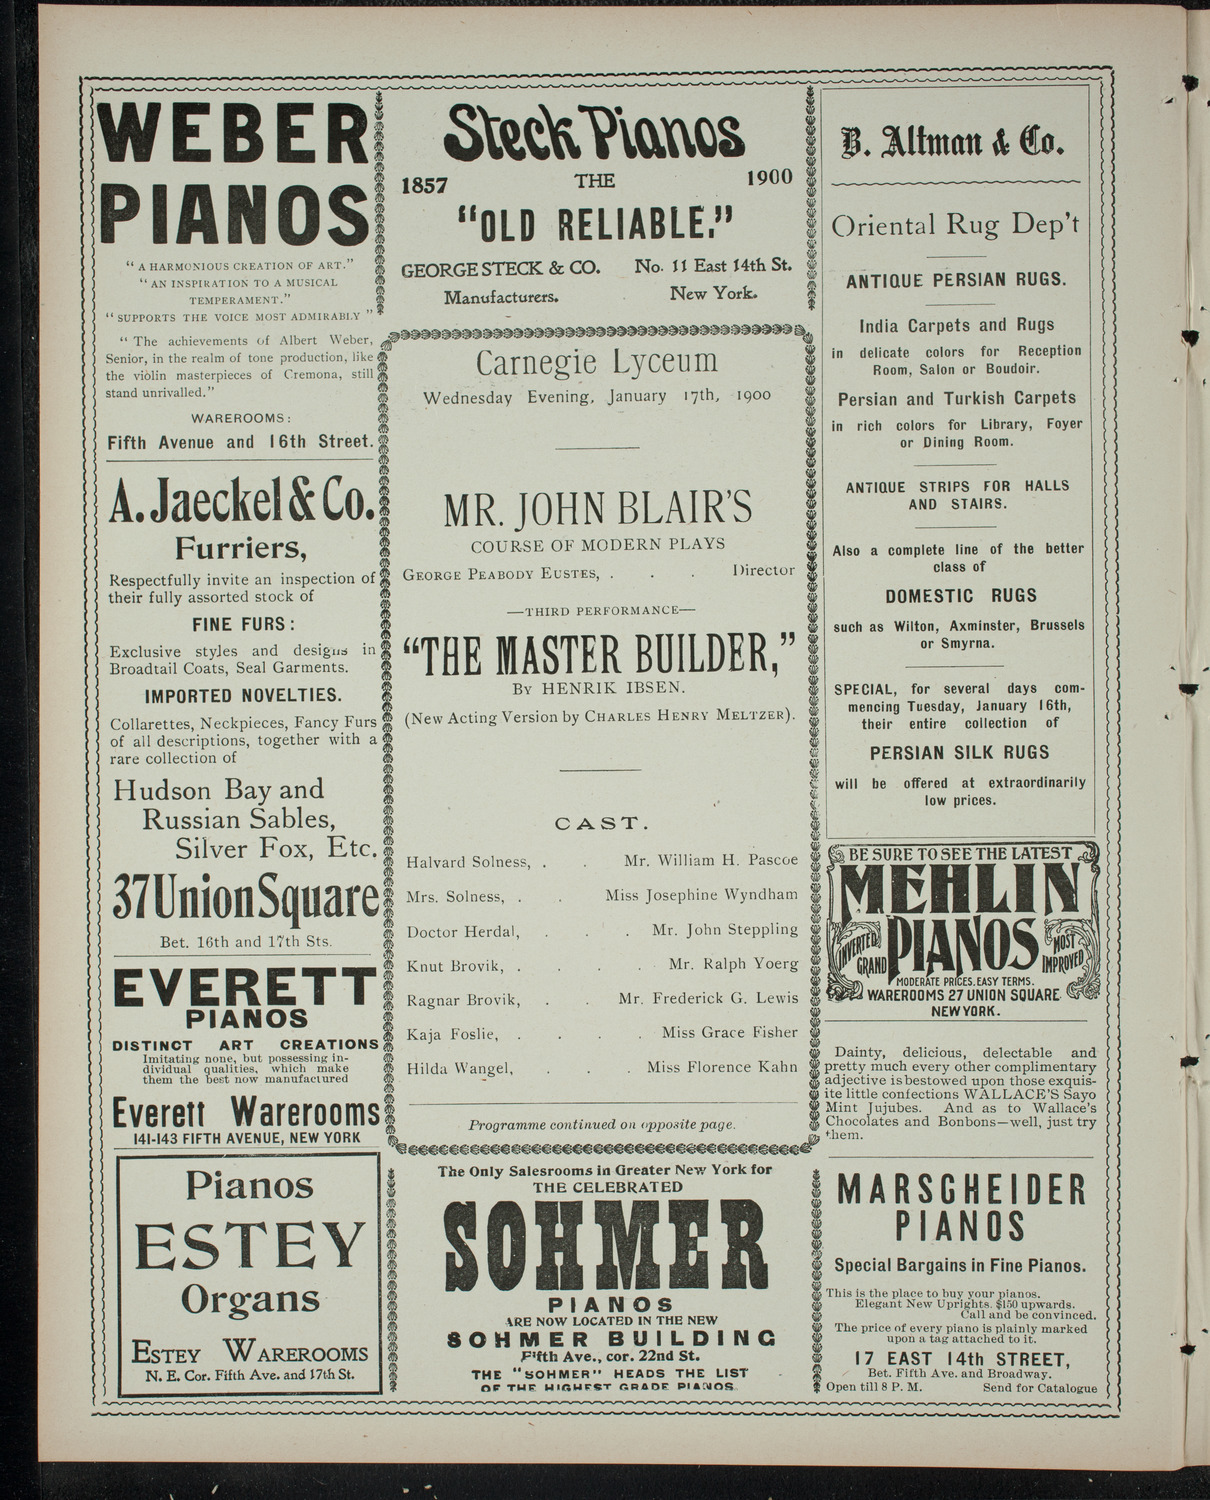 Mr. John Blair's Course of Modern Plays, January 17, 1900, program page 2